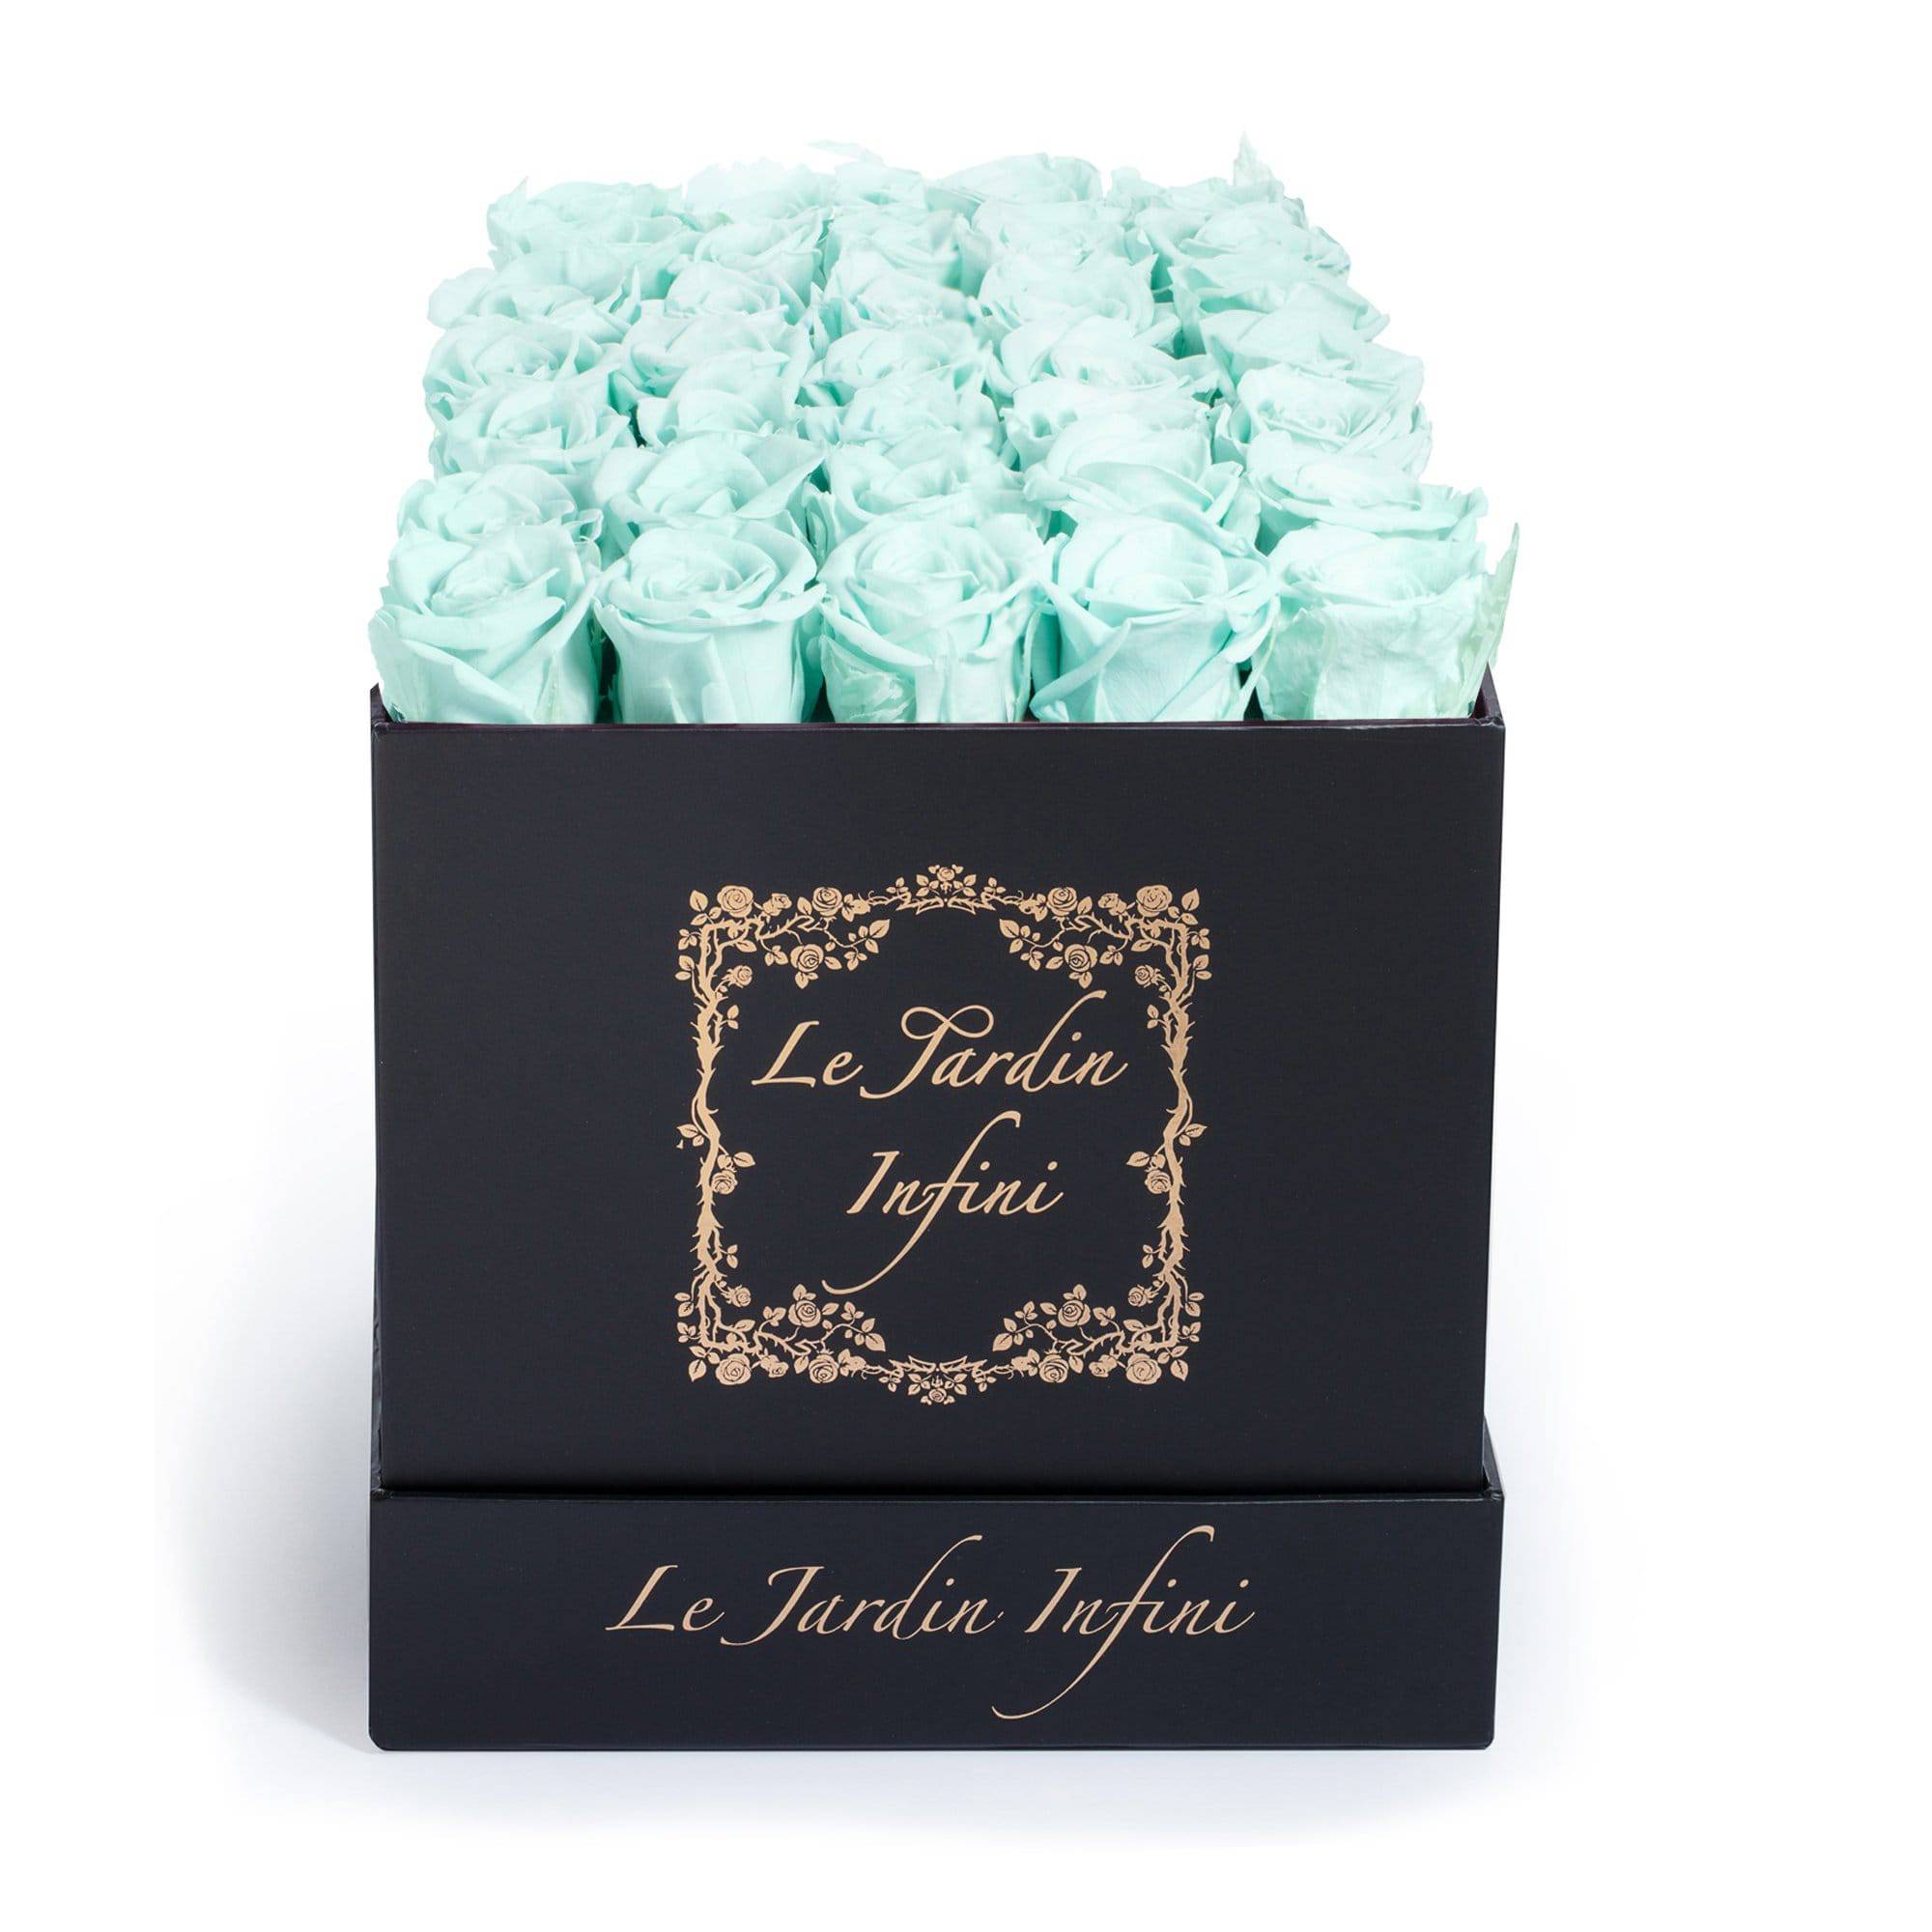 Light Green Preserved Roses - Medium Square Black Box - Le Jardin Infini Roses in a Box